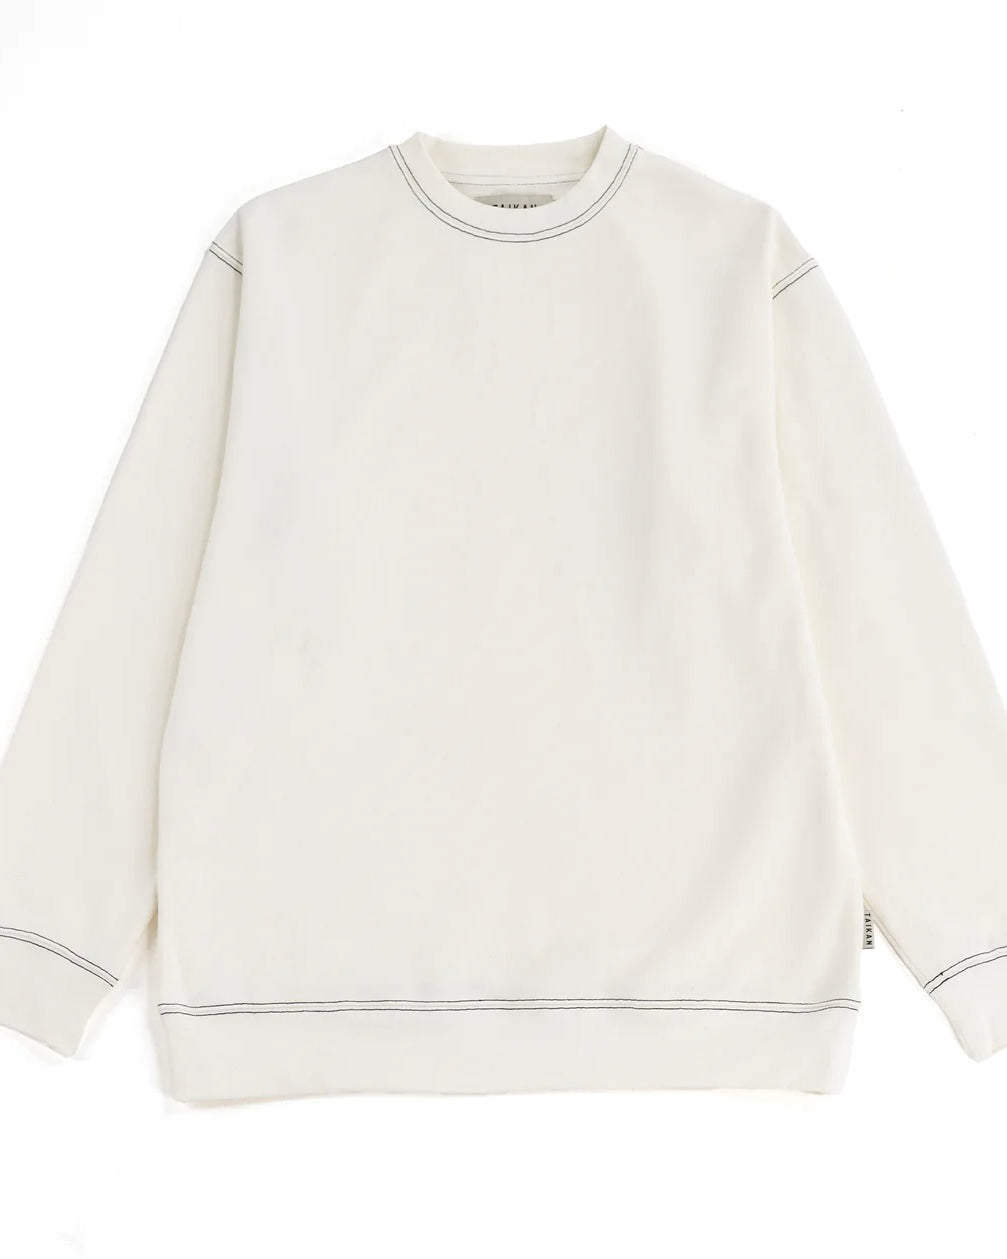 Taikan Custom Crew Sweatshirt in Cream Contrast Stitch